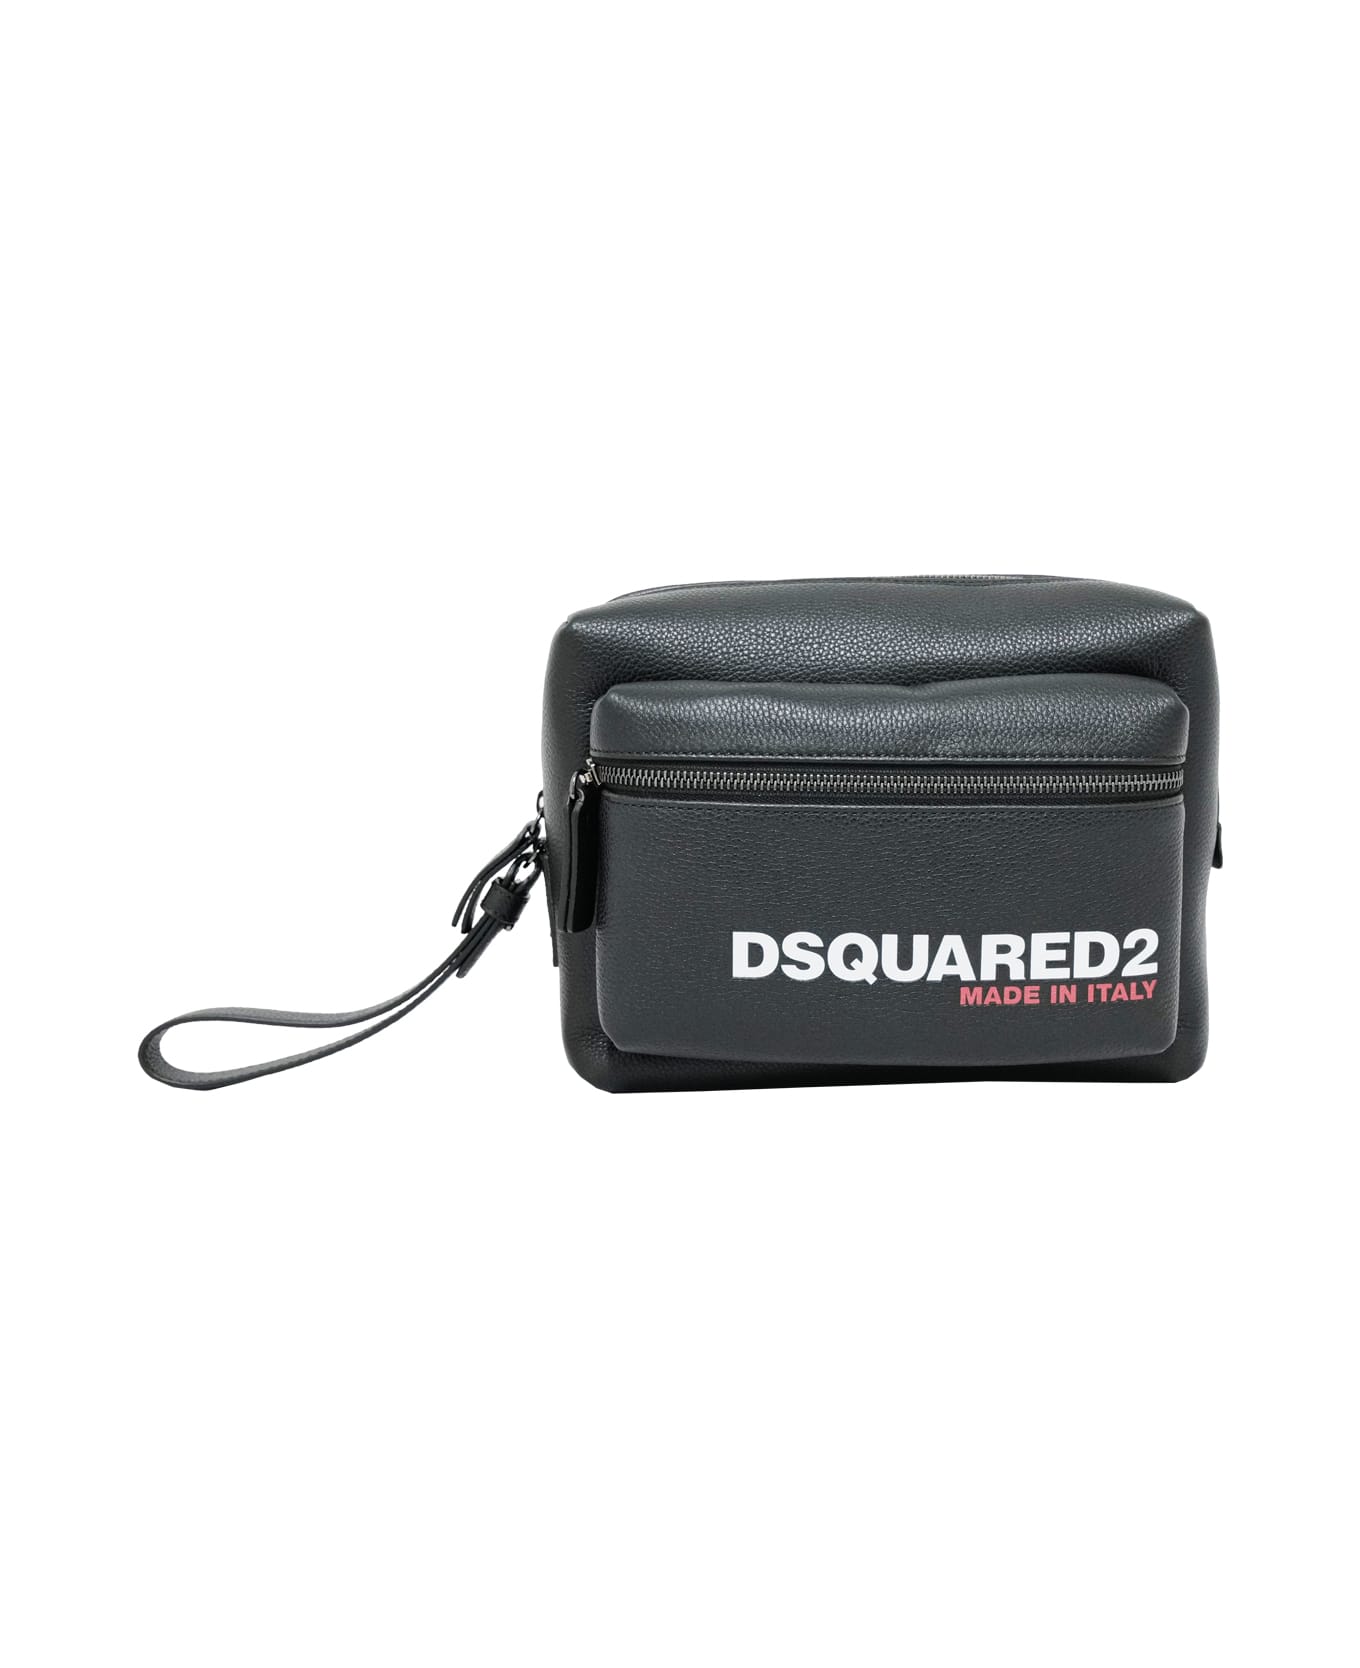 Dsquared2 Handbag - Black